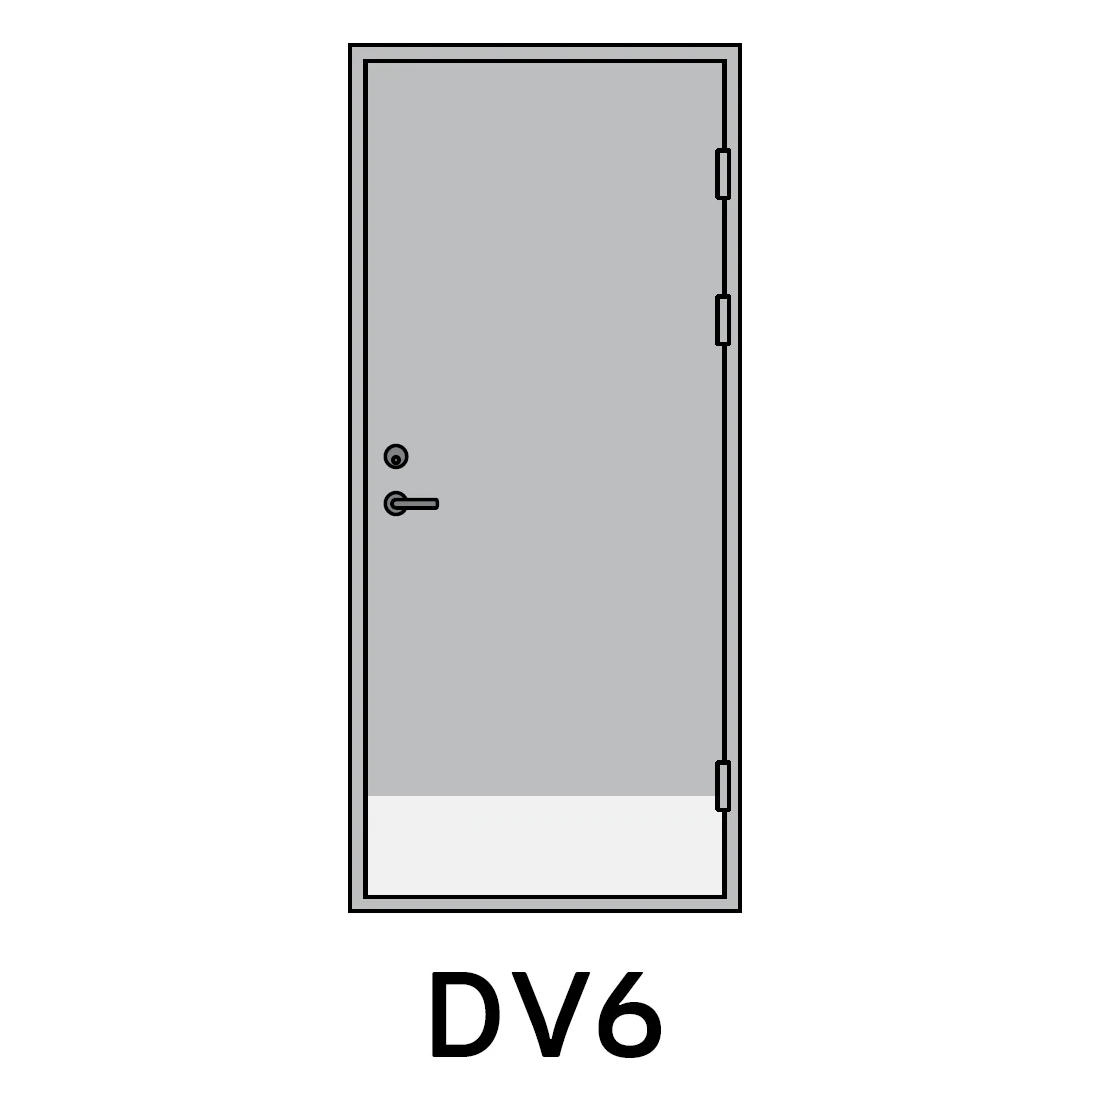 DV6 - 20cm